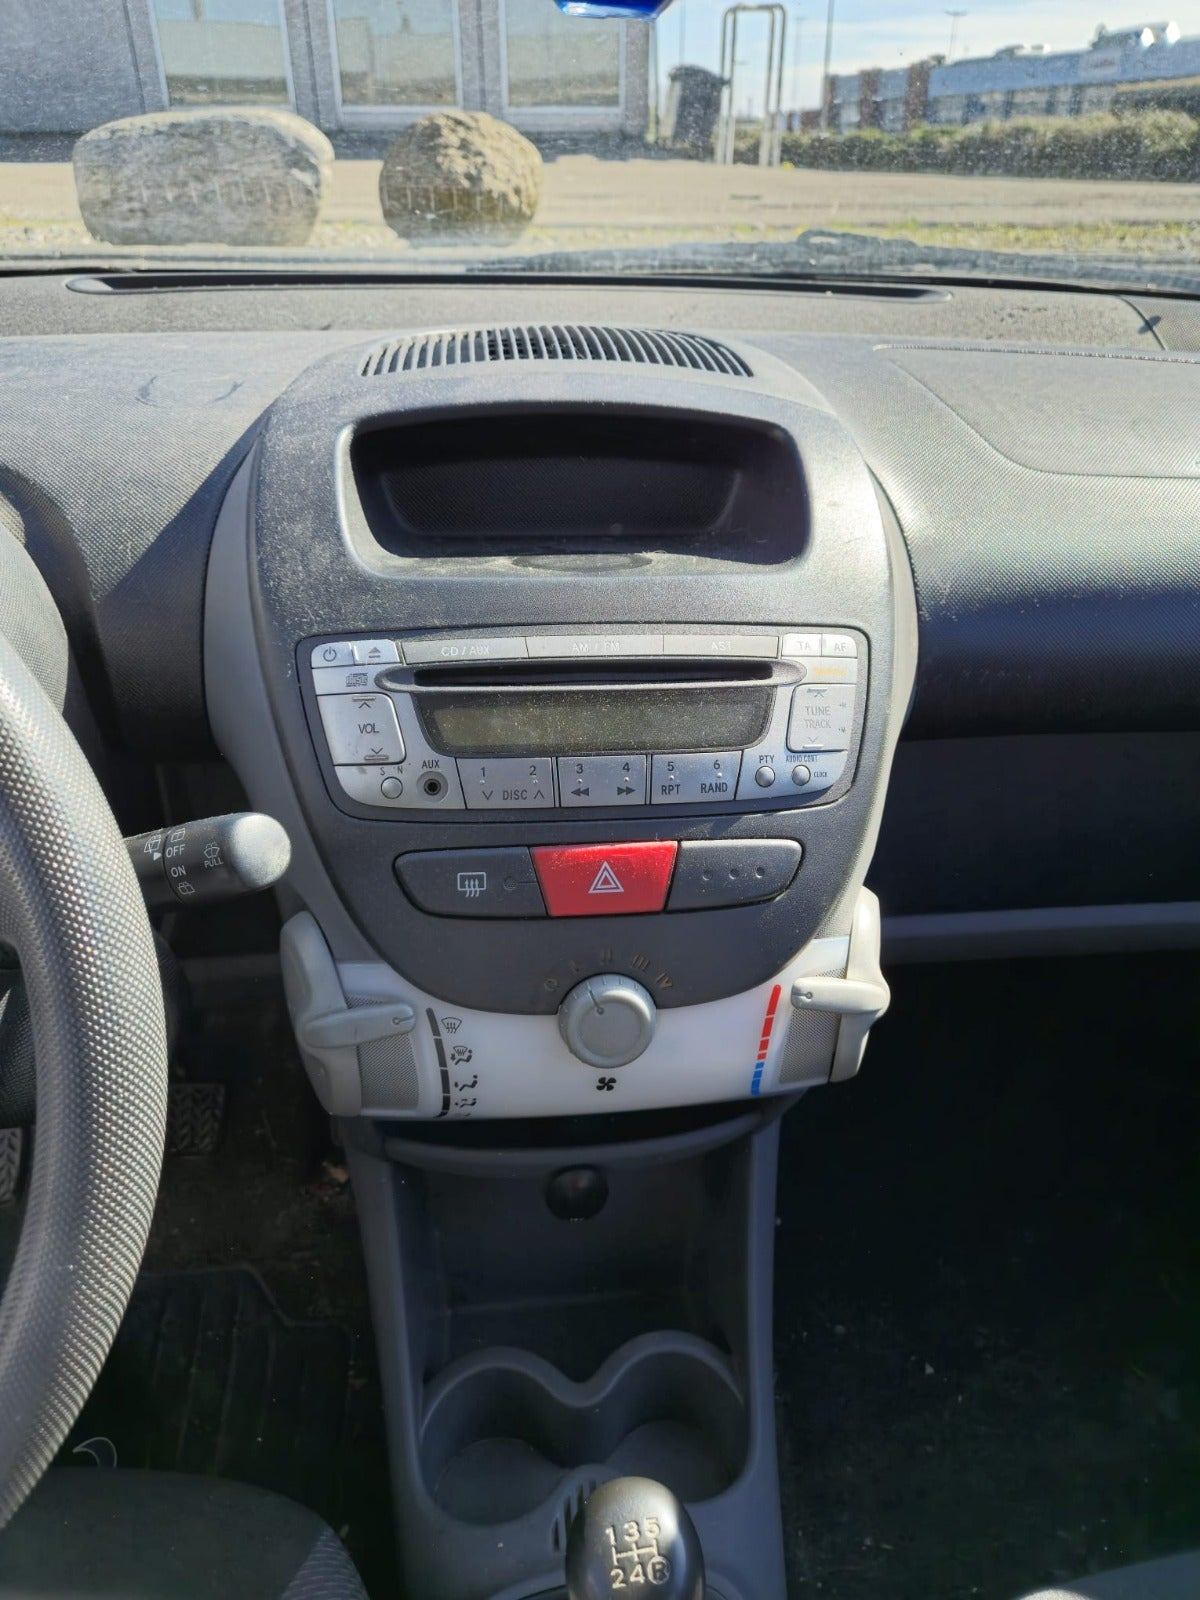 Toyota Aygo 1,0 Benzin modelår 2008 km 220000 ABS airbag